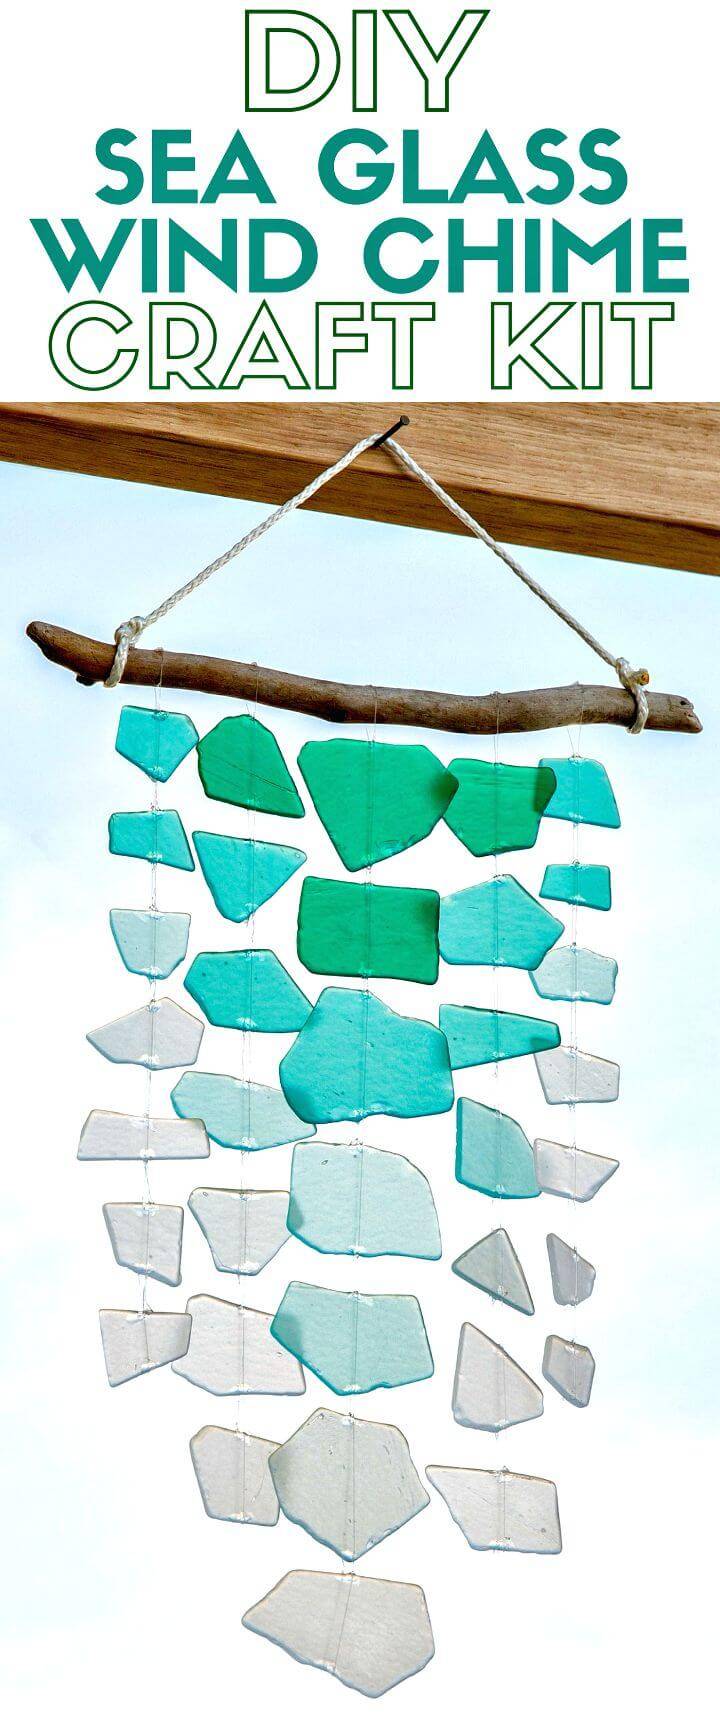 DIY Sea Glass Wind Chime Craft Kit